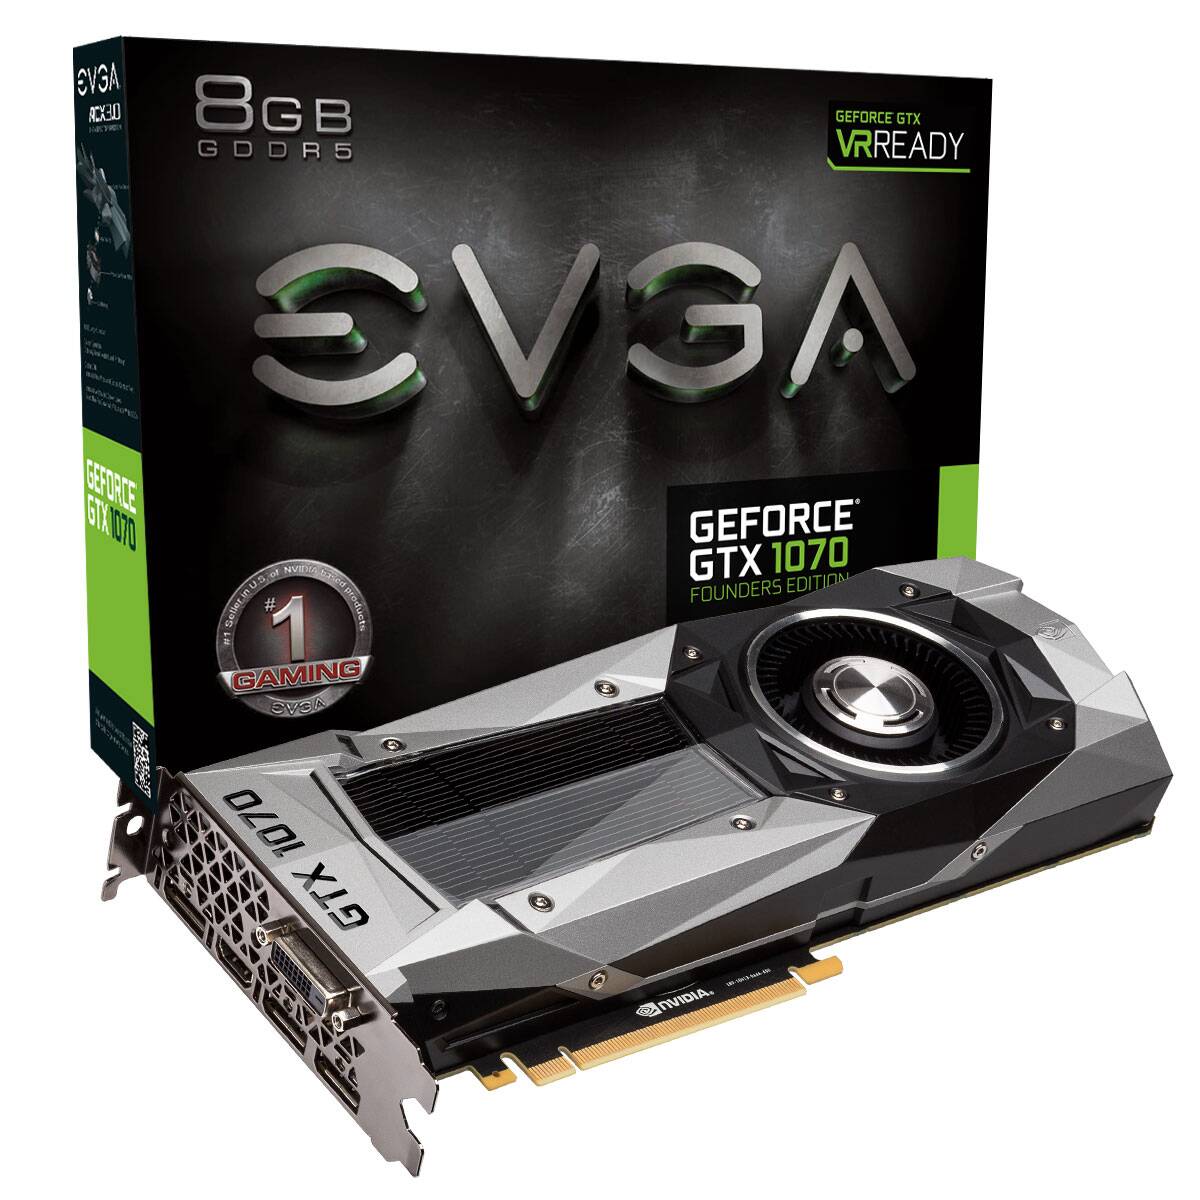 EVGA - Articles - EVGA GeForce GTX 1070